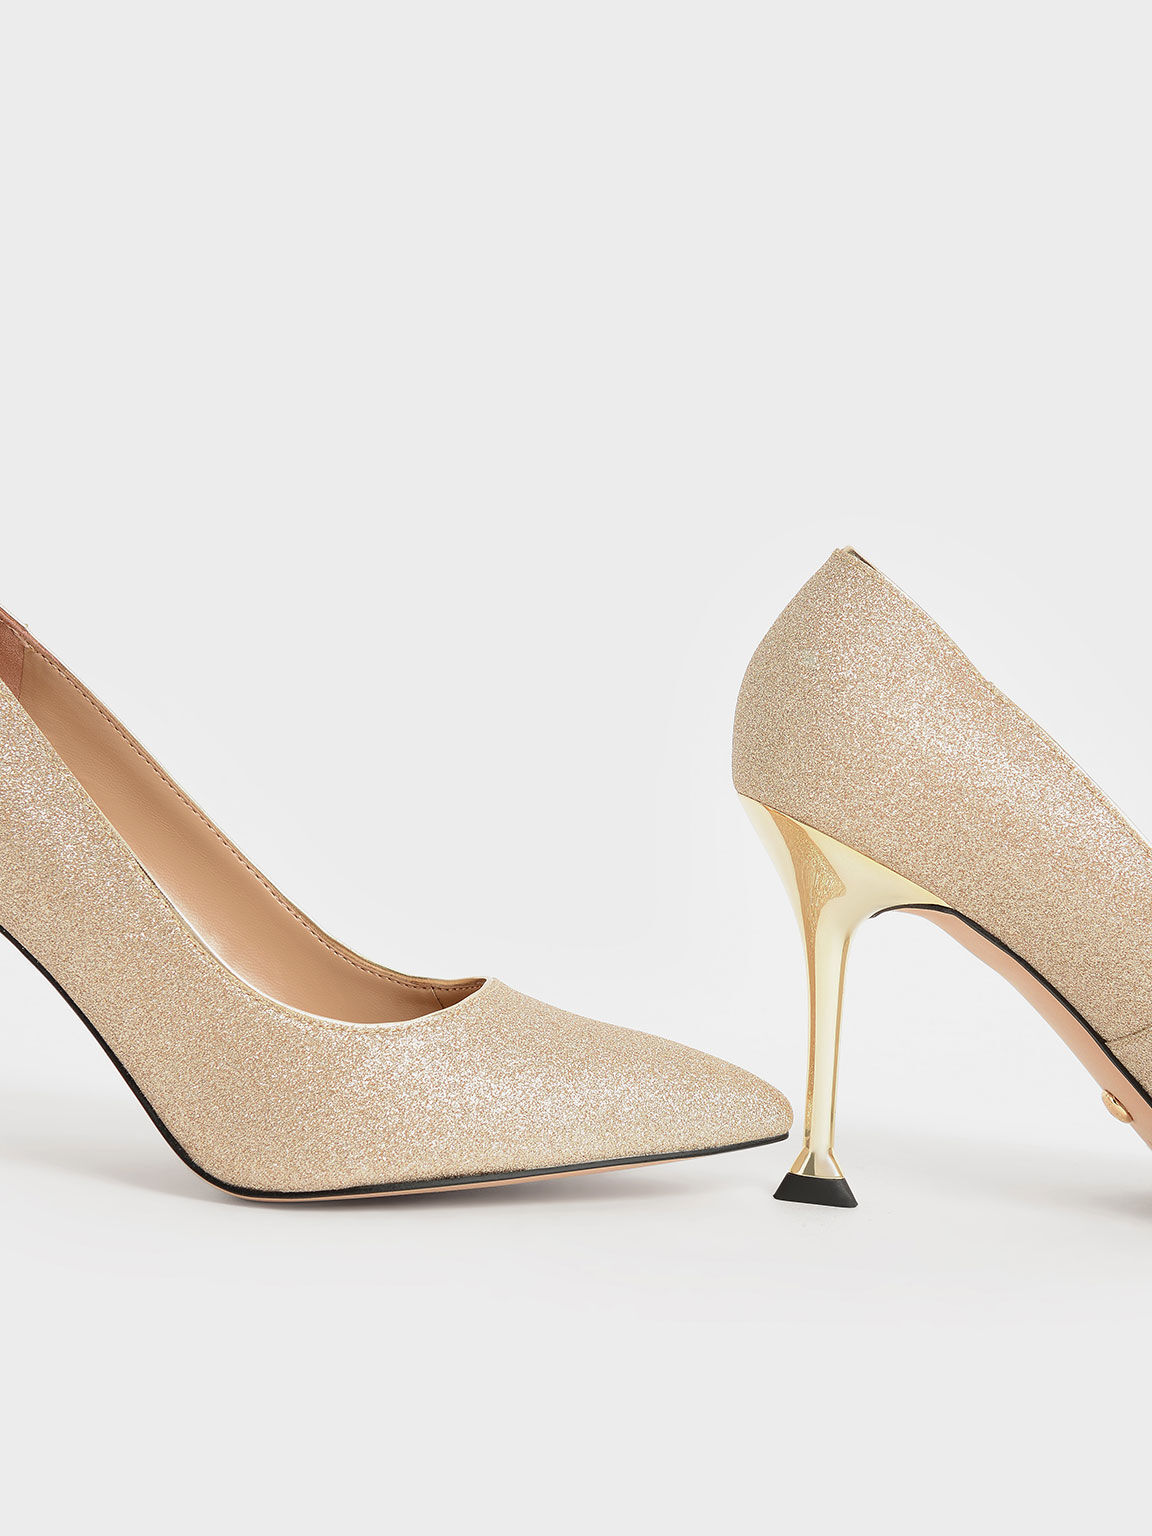 Adira - Made to Order - Rose Gold Glitter Bridal Pump - Burju Shoes